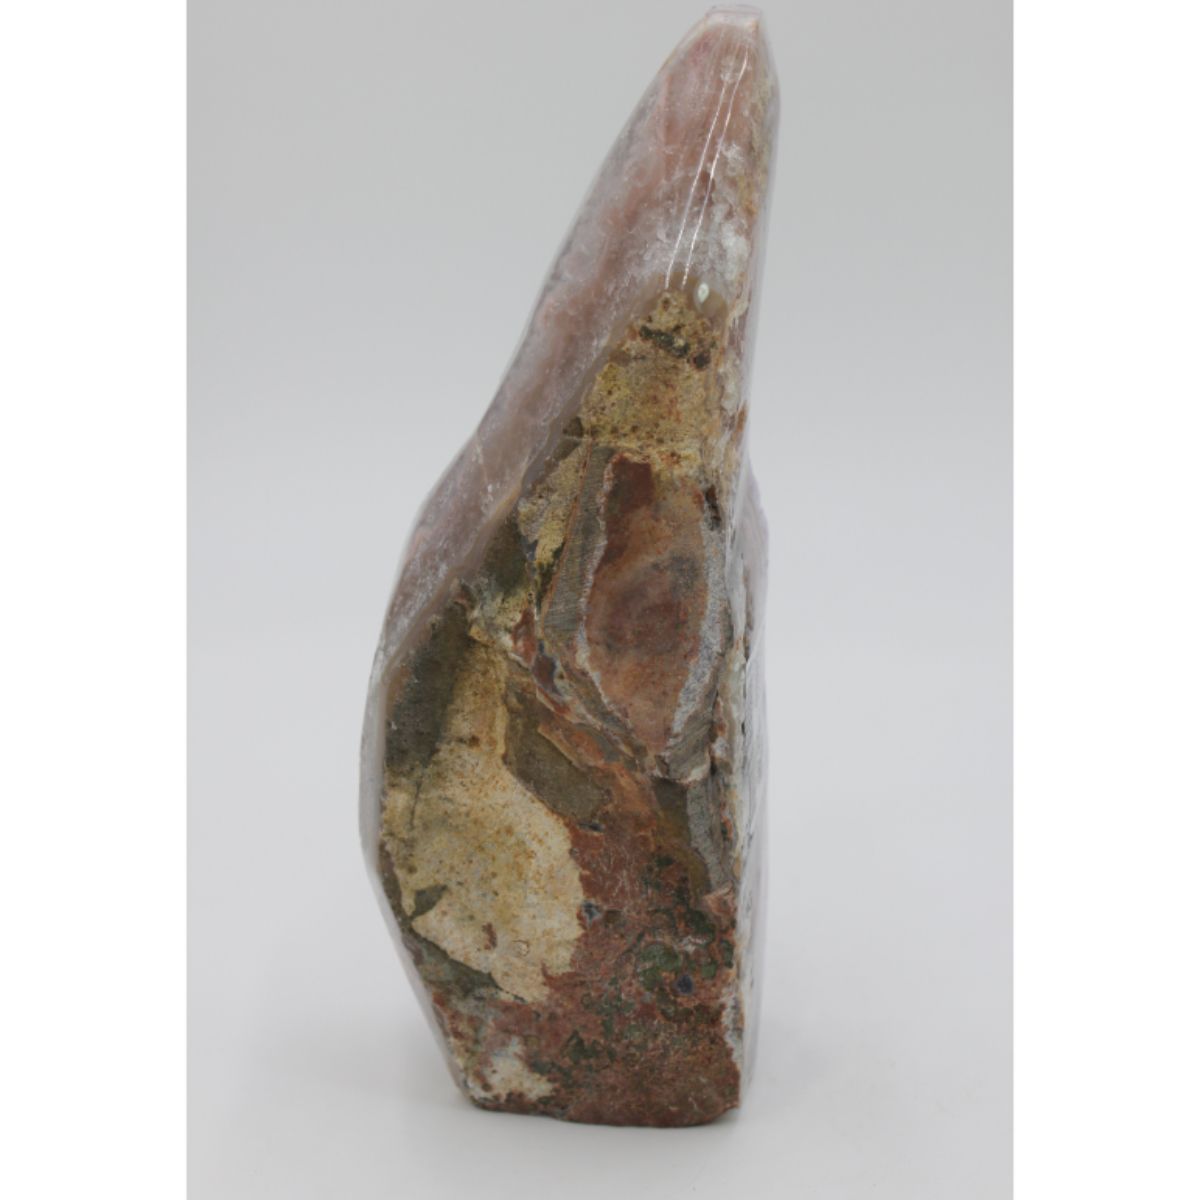 Piedra/Mineral Amatista 1200-1400gr